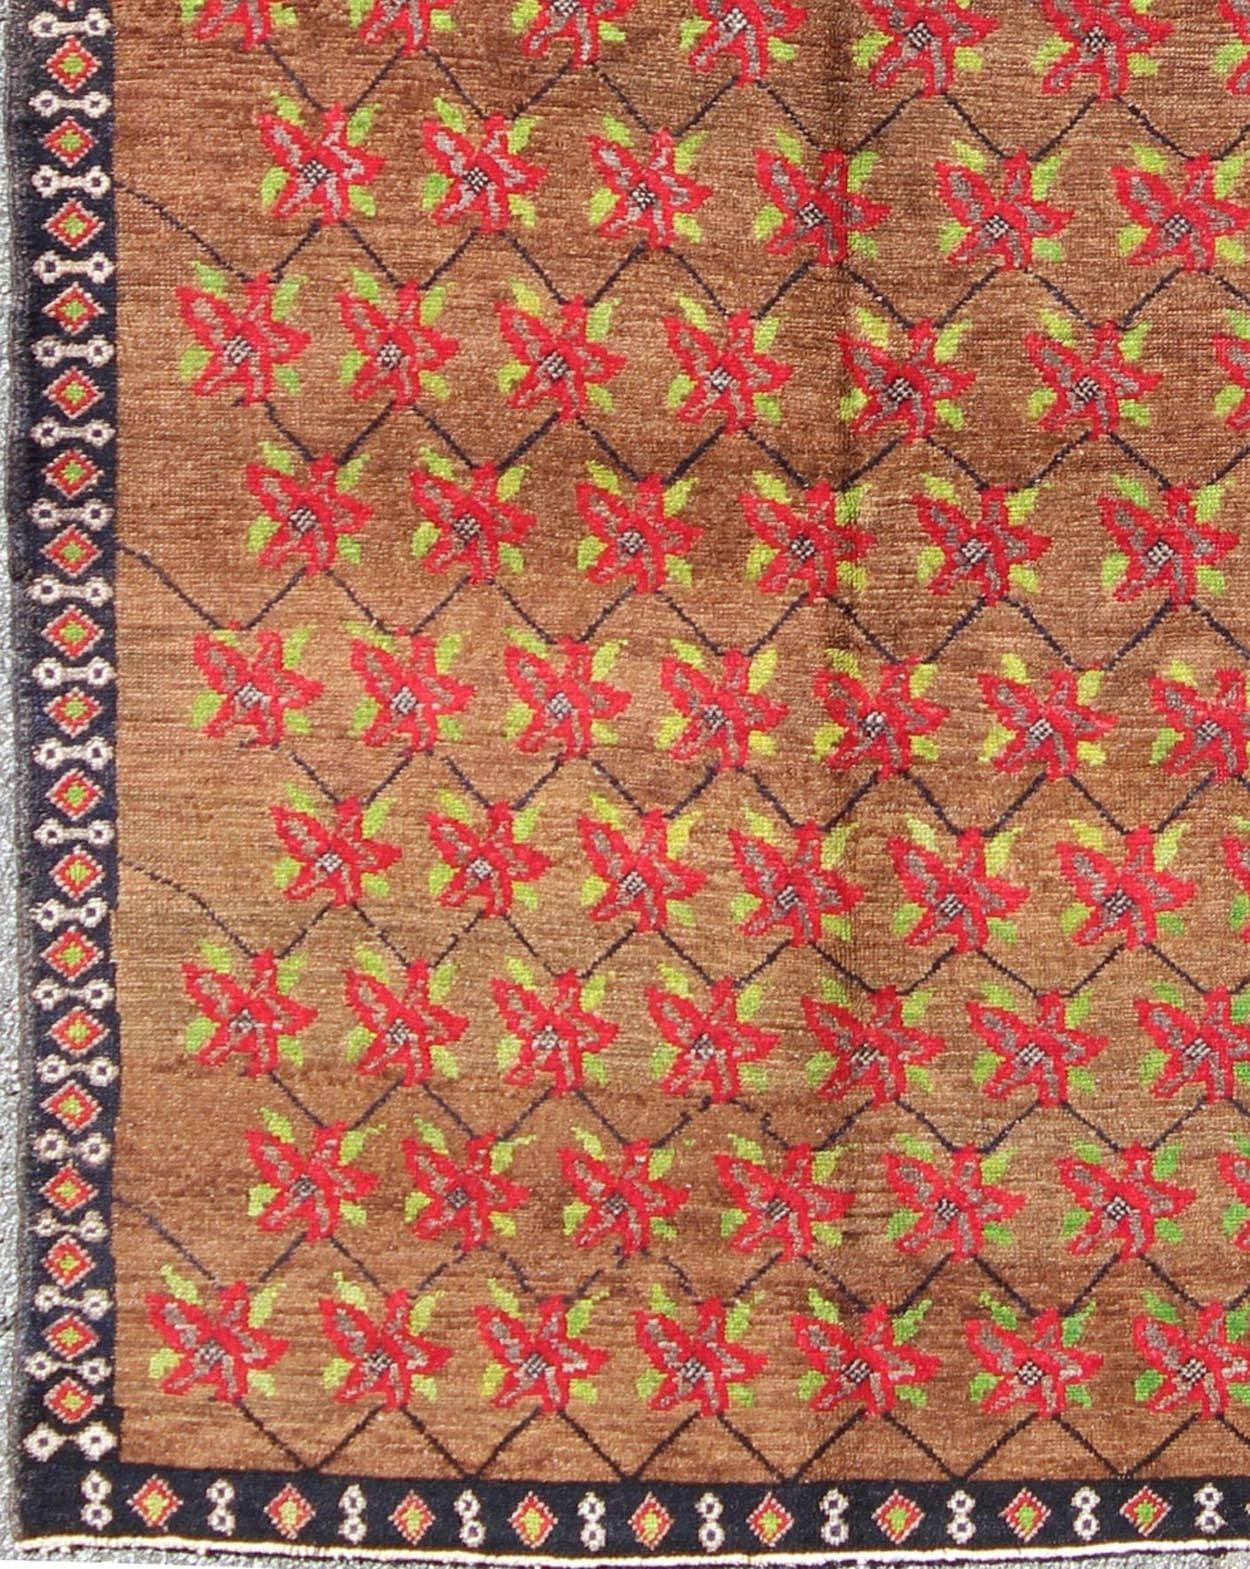 Turkish Oushak Carpet with Poinsettia Design With A Light Brown Background


All-over floral design vintage Turkish Oushak. Keivan Woven Arts /  rug TU-MTU-3315, country of origin / type: Turkey / Oushak, circa 1940.

This vintage Turkish rug